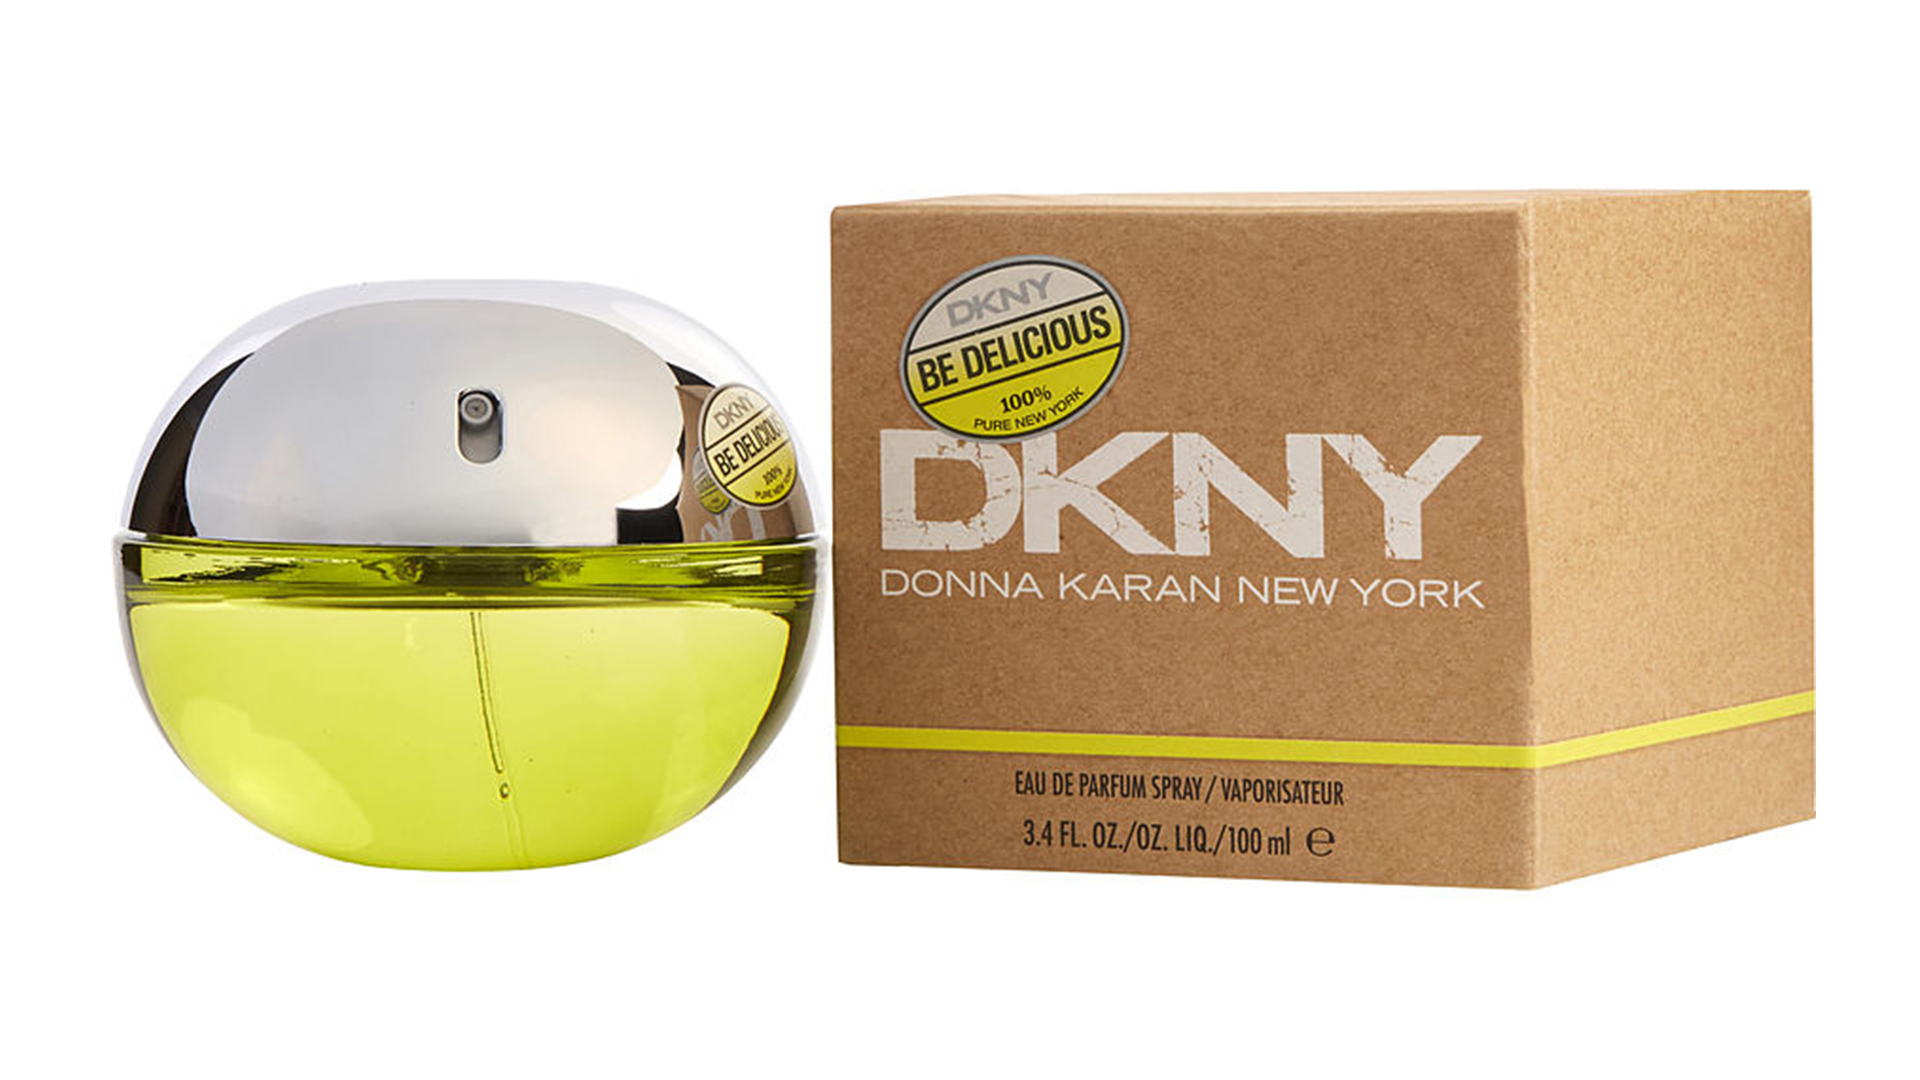 Dkny be delicious цены. DKNY be delicious 30 мл. Donna Karan DKNY be delicious, EDP, 100 ml. Донна Каран Нью-Йорк зеленое яблоко 100 мл. Туалетная вода Донна Каран Нью-Йорк.